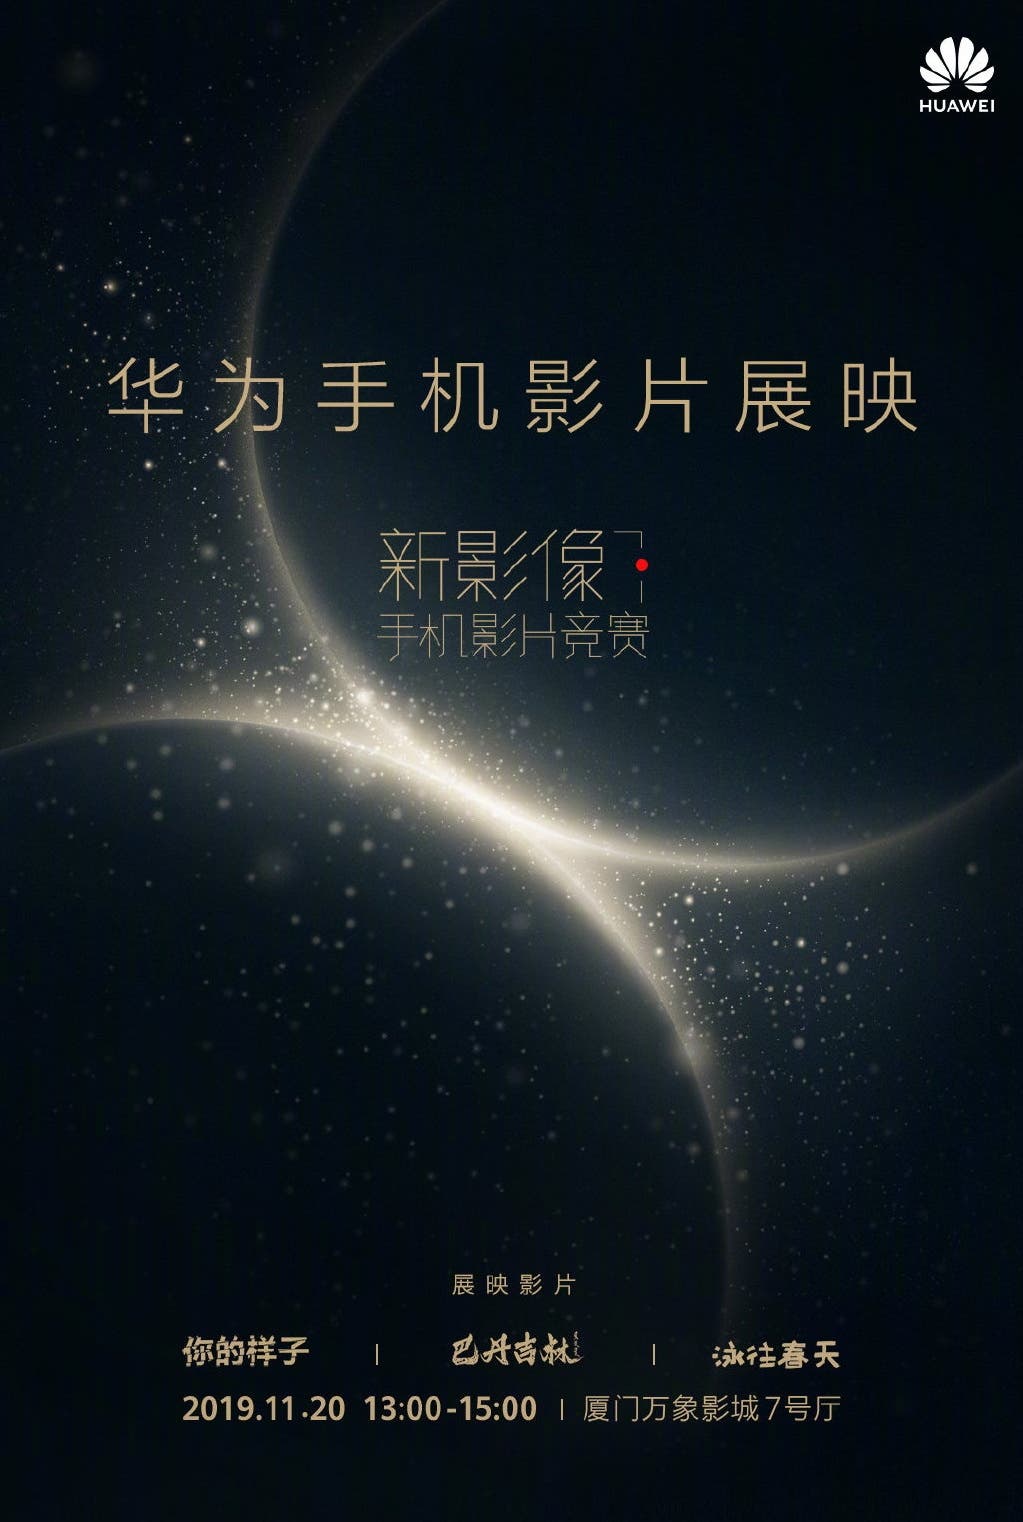 Huawei Mate 30 short films coming soon